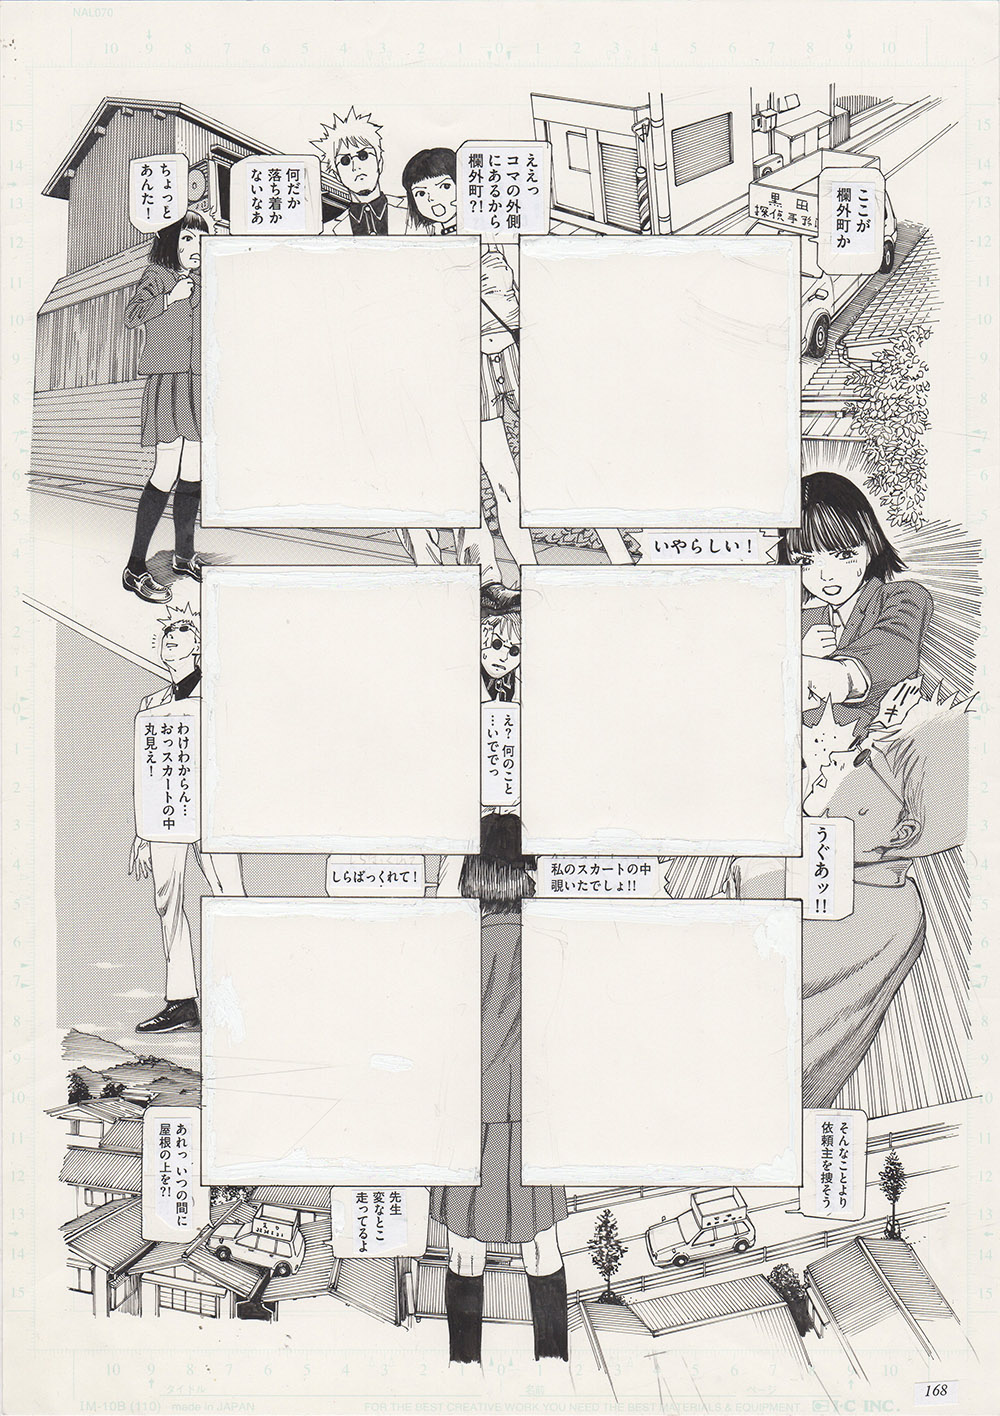 Rangai No Machi (The Town Between Panels) - page 2